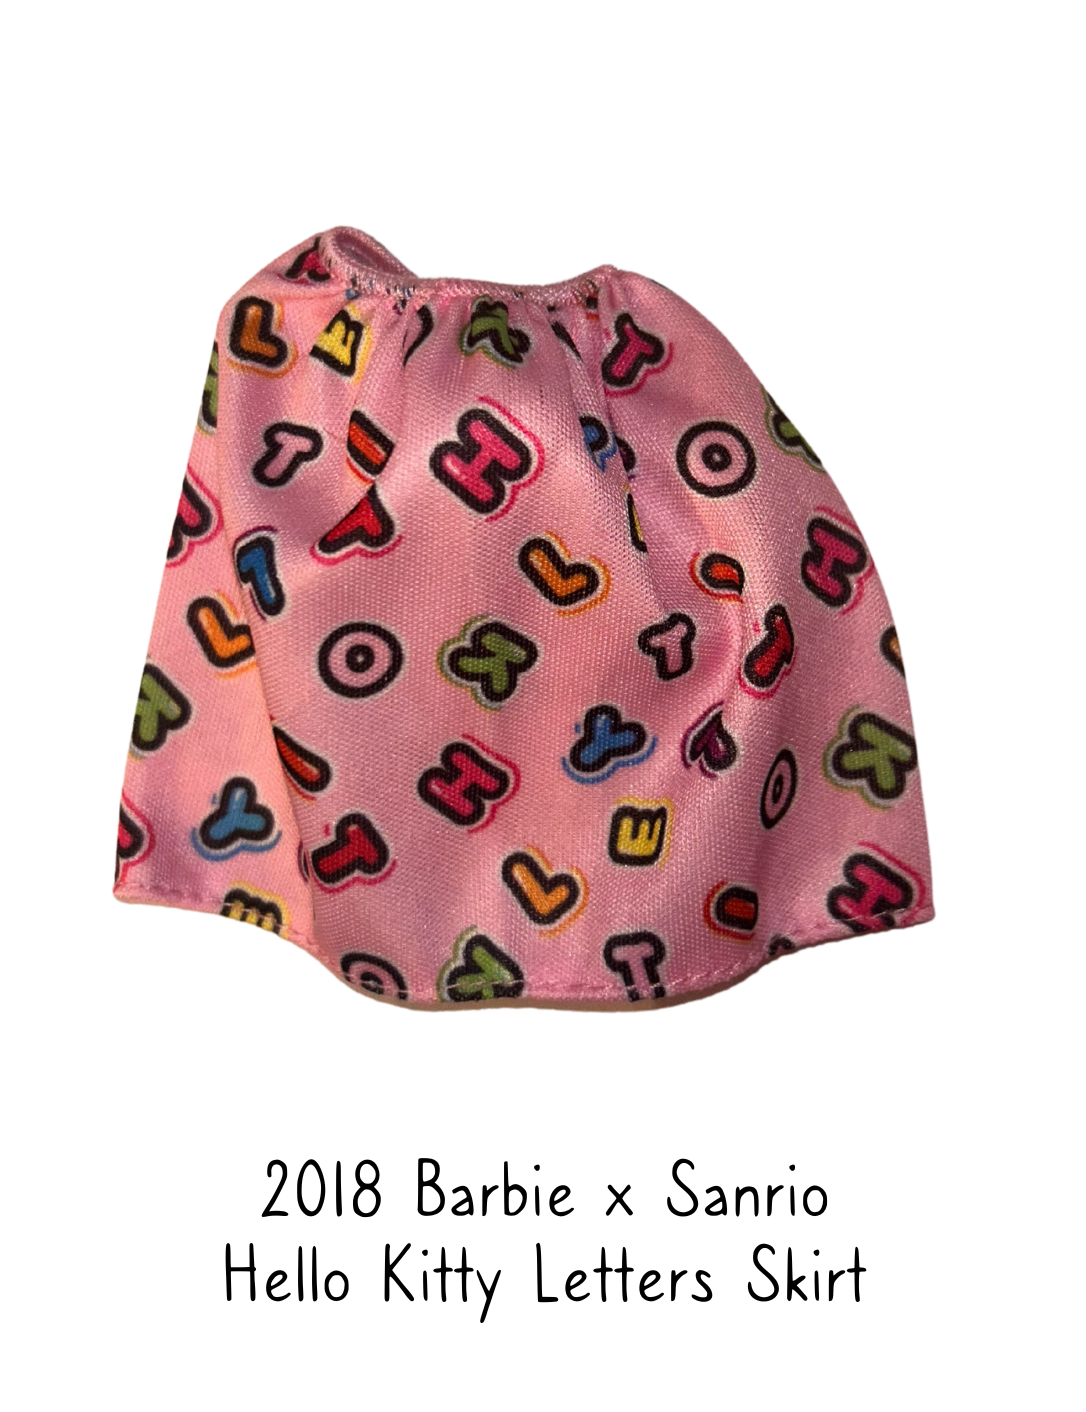 2018 Barbie x Sanrio Hello Kitty Letters Skirt